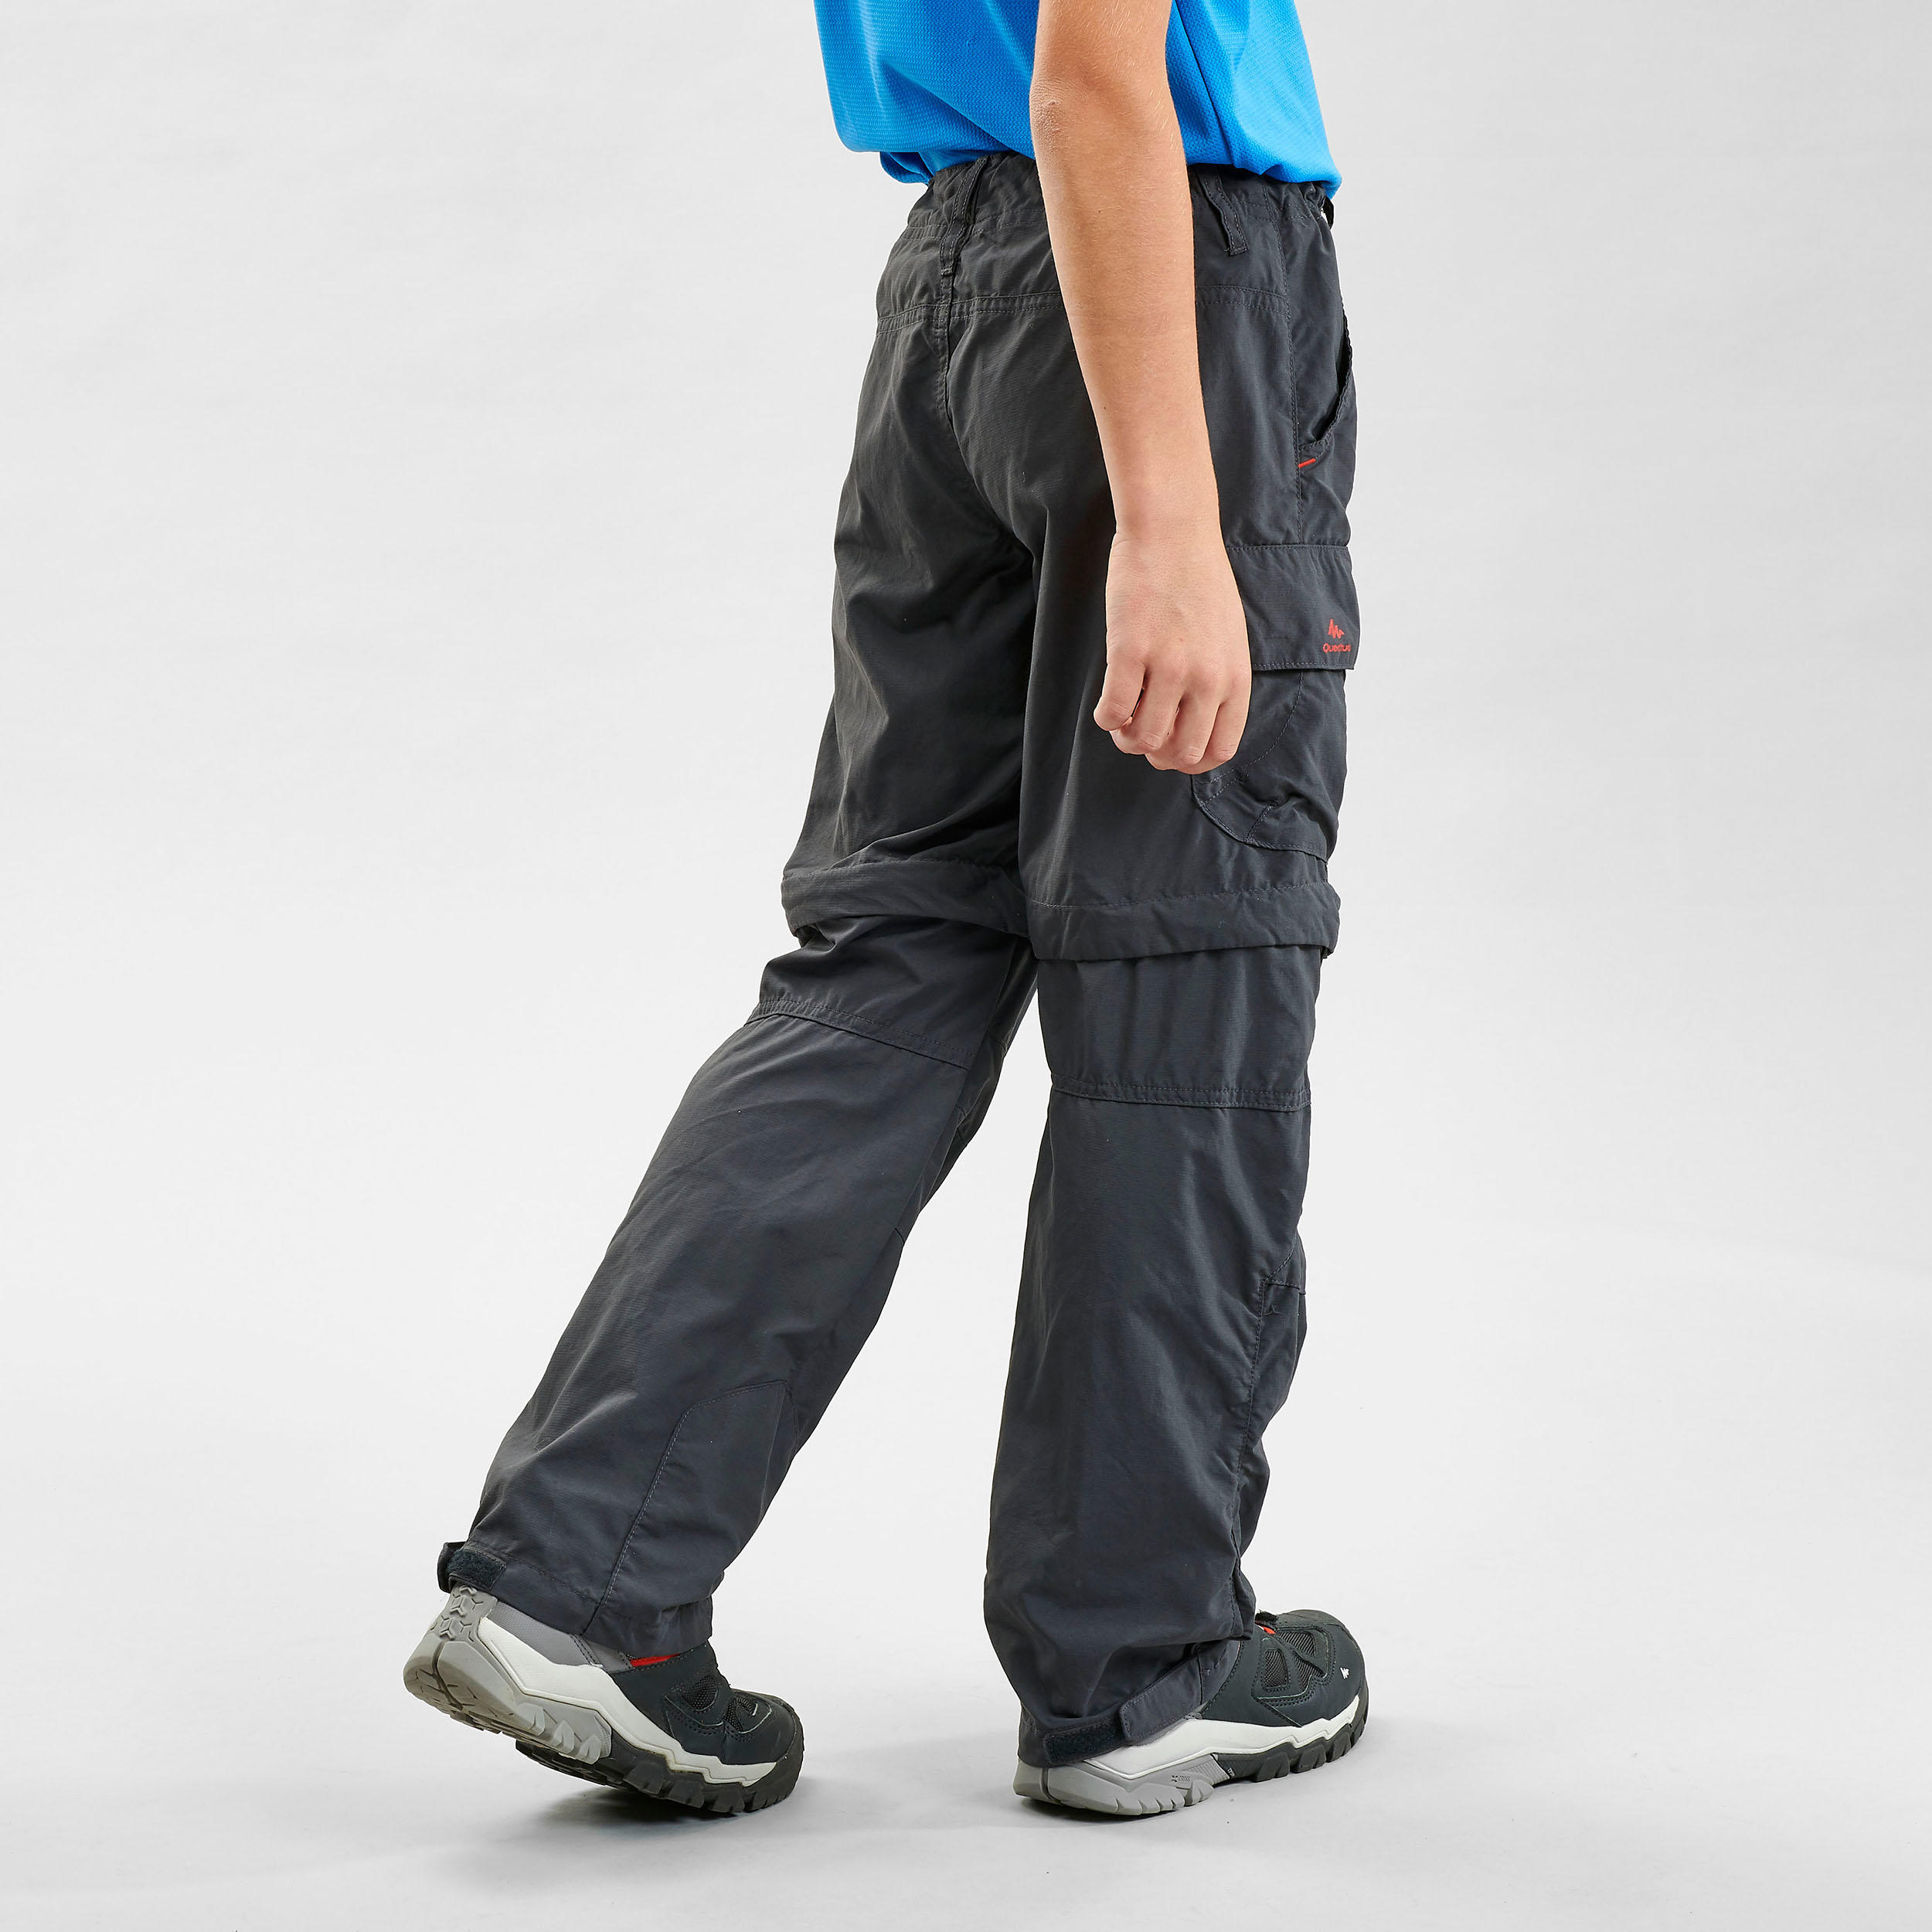 Pantalon de randonnée convertible enfant - MH 500 noir - QUECHUA